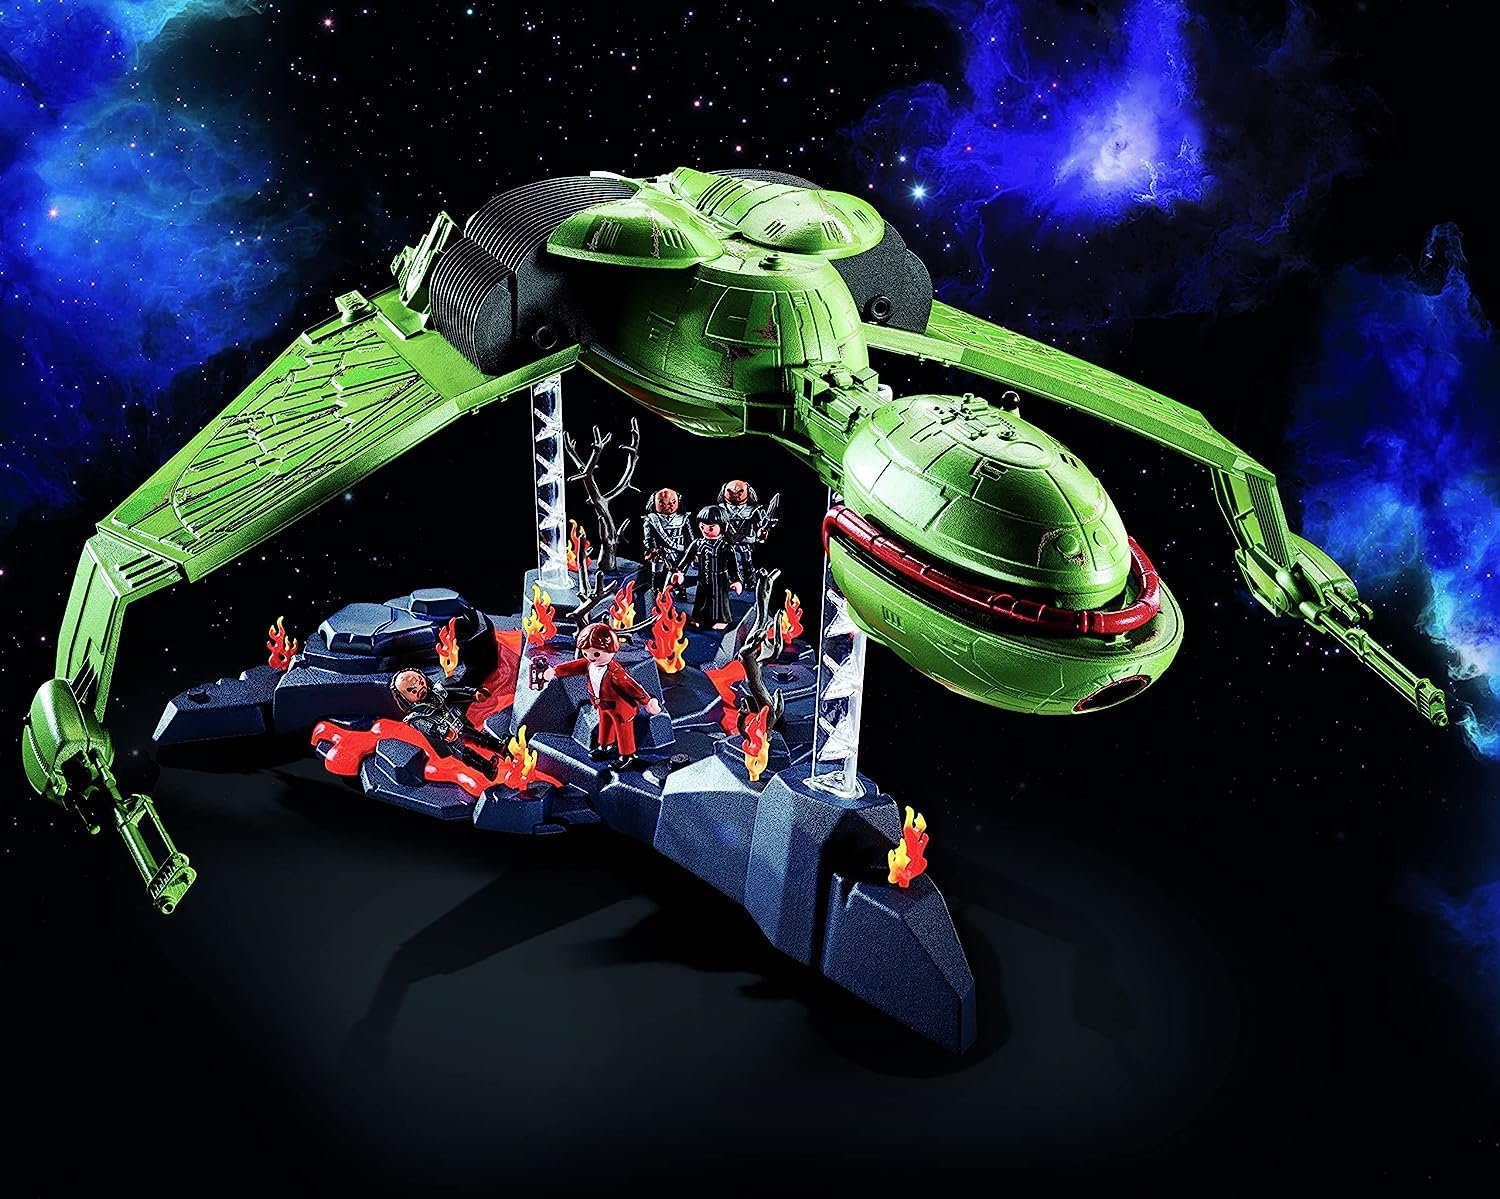 Playmobil sort l'USS Enterprise de Star Trek